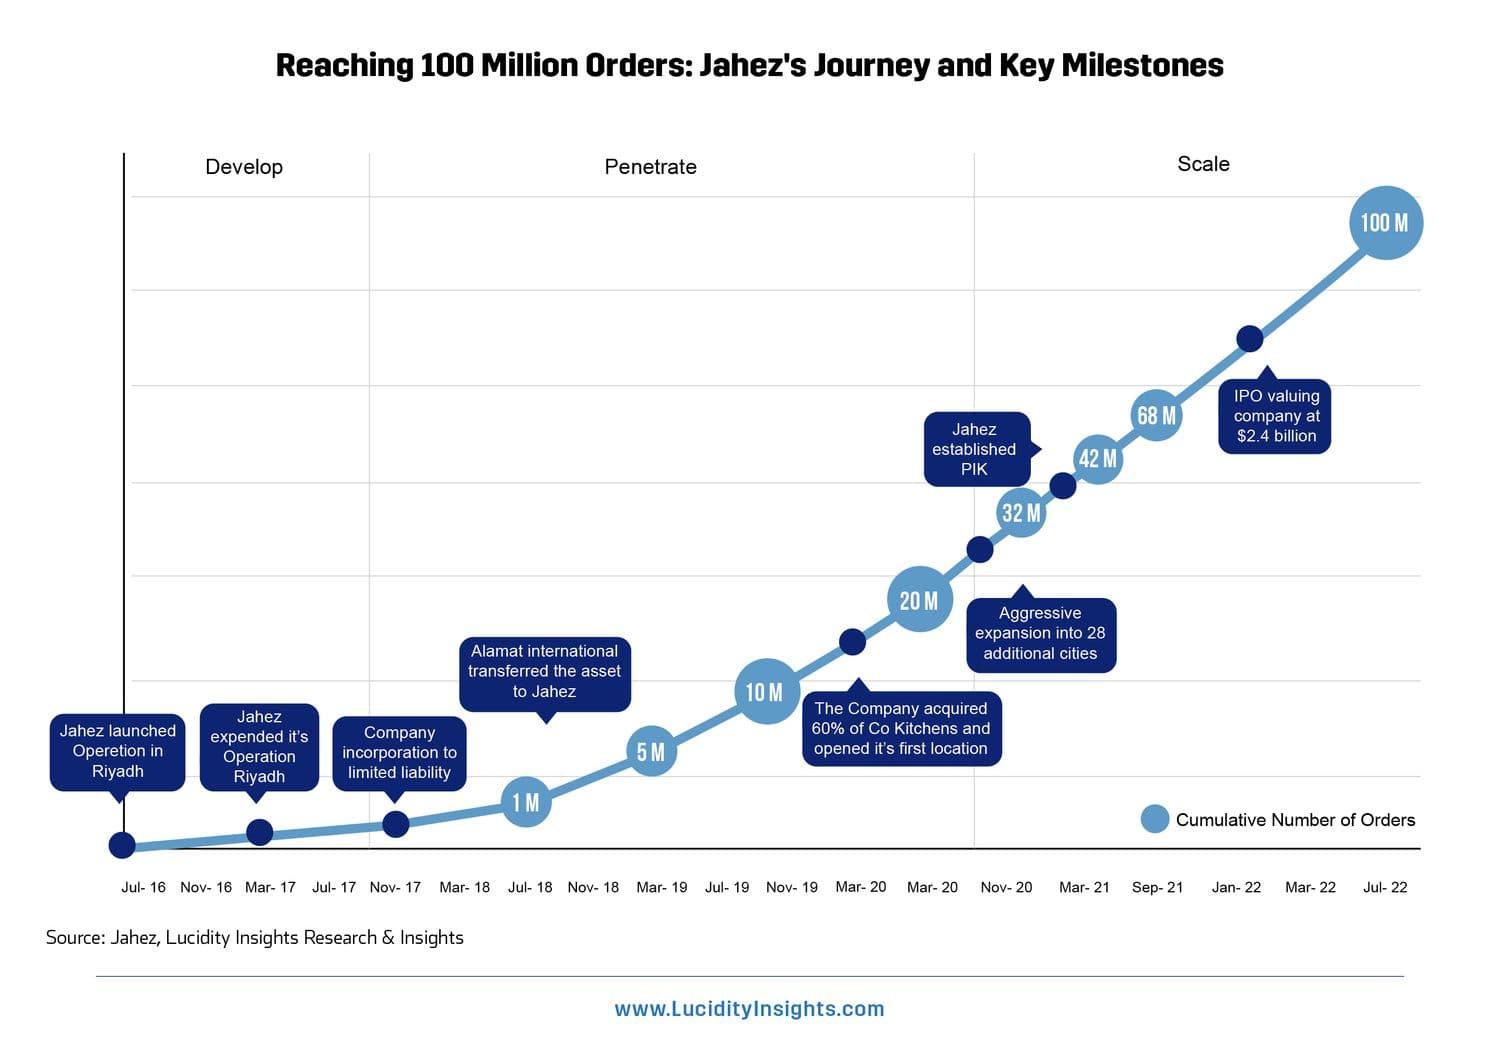 Jahez's Journey and Key Milestones in Reaching 100 Million Orders